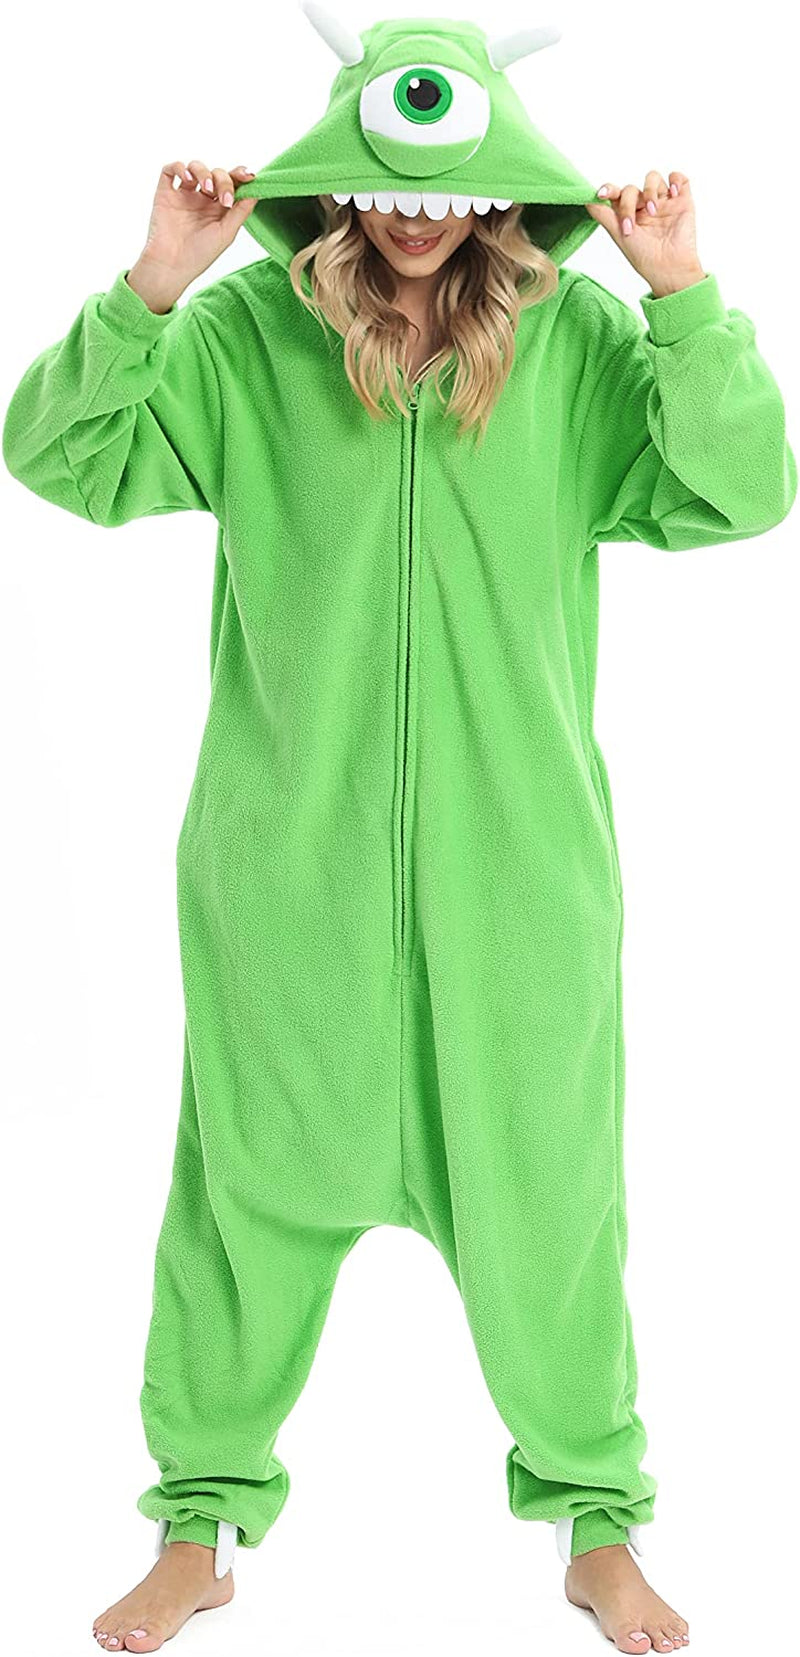 Wishliker Unisex Adult Cow Onesie Costume Halloween Cosplay Animal Pajamas One Piece  Wishliker Mike Wazowski-Zipper-Green Large 